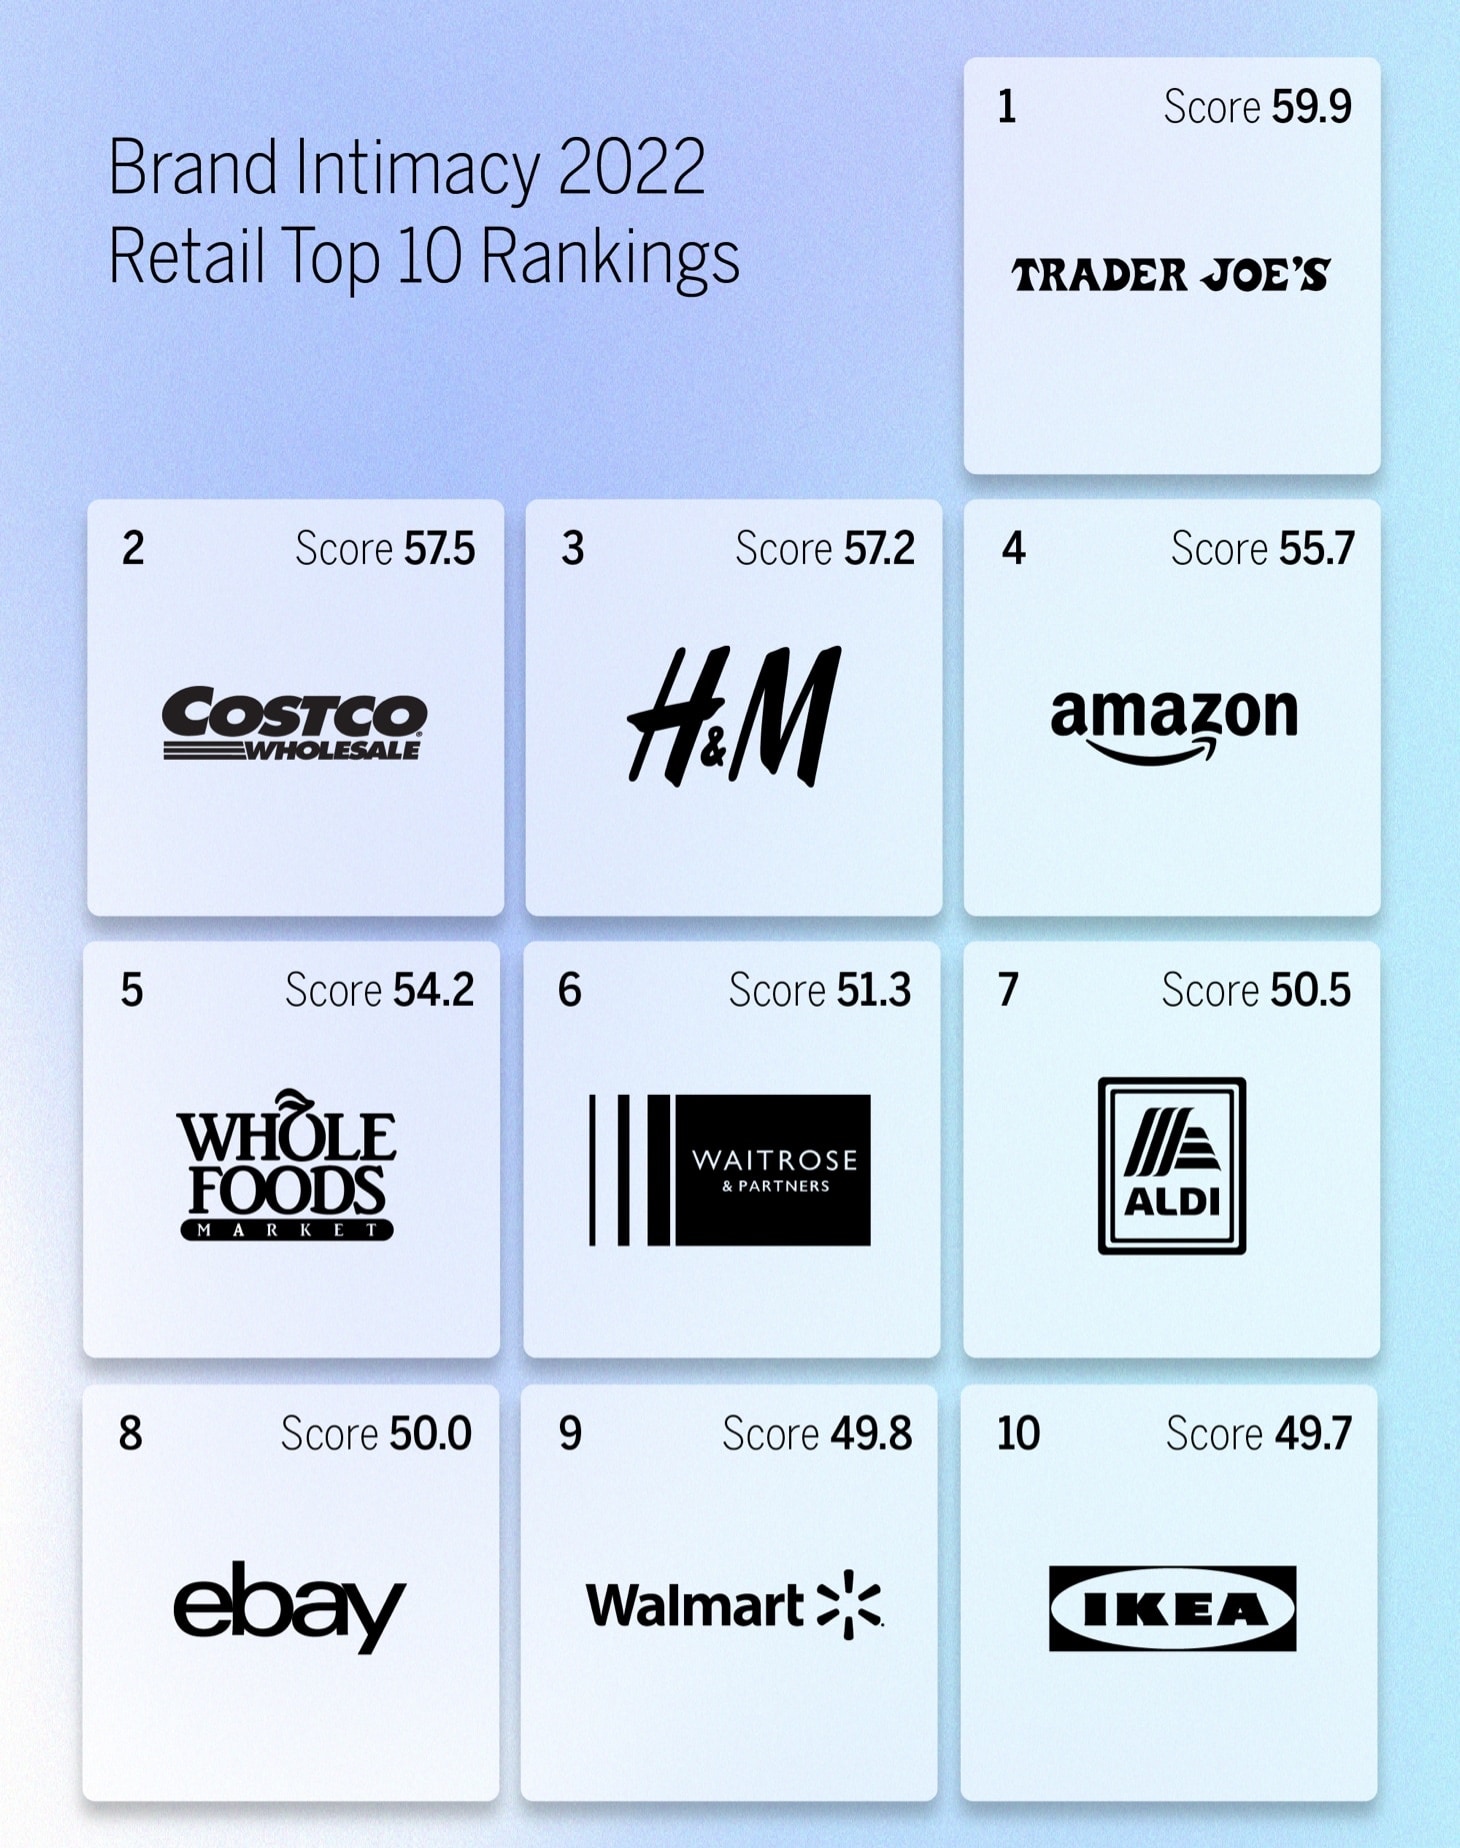 Brand intimacy 2022 retail top 10 rankings.